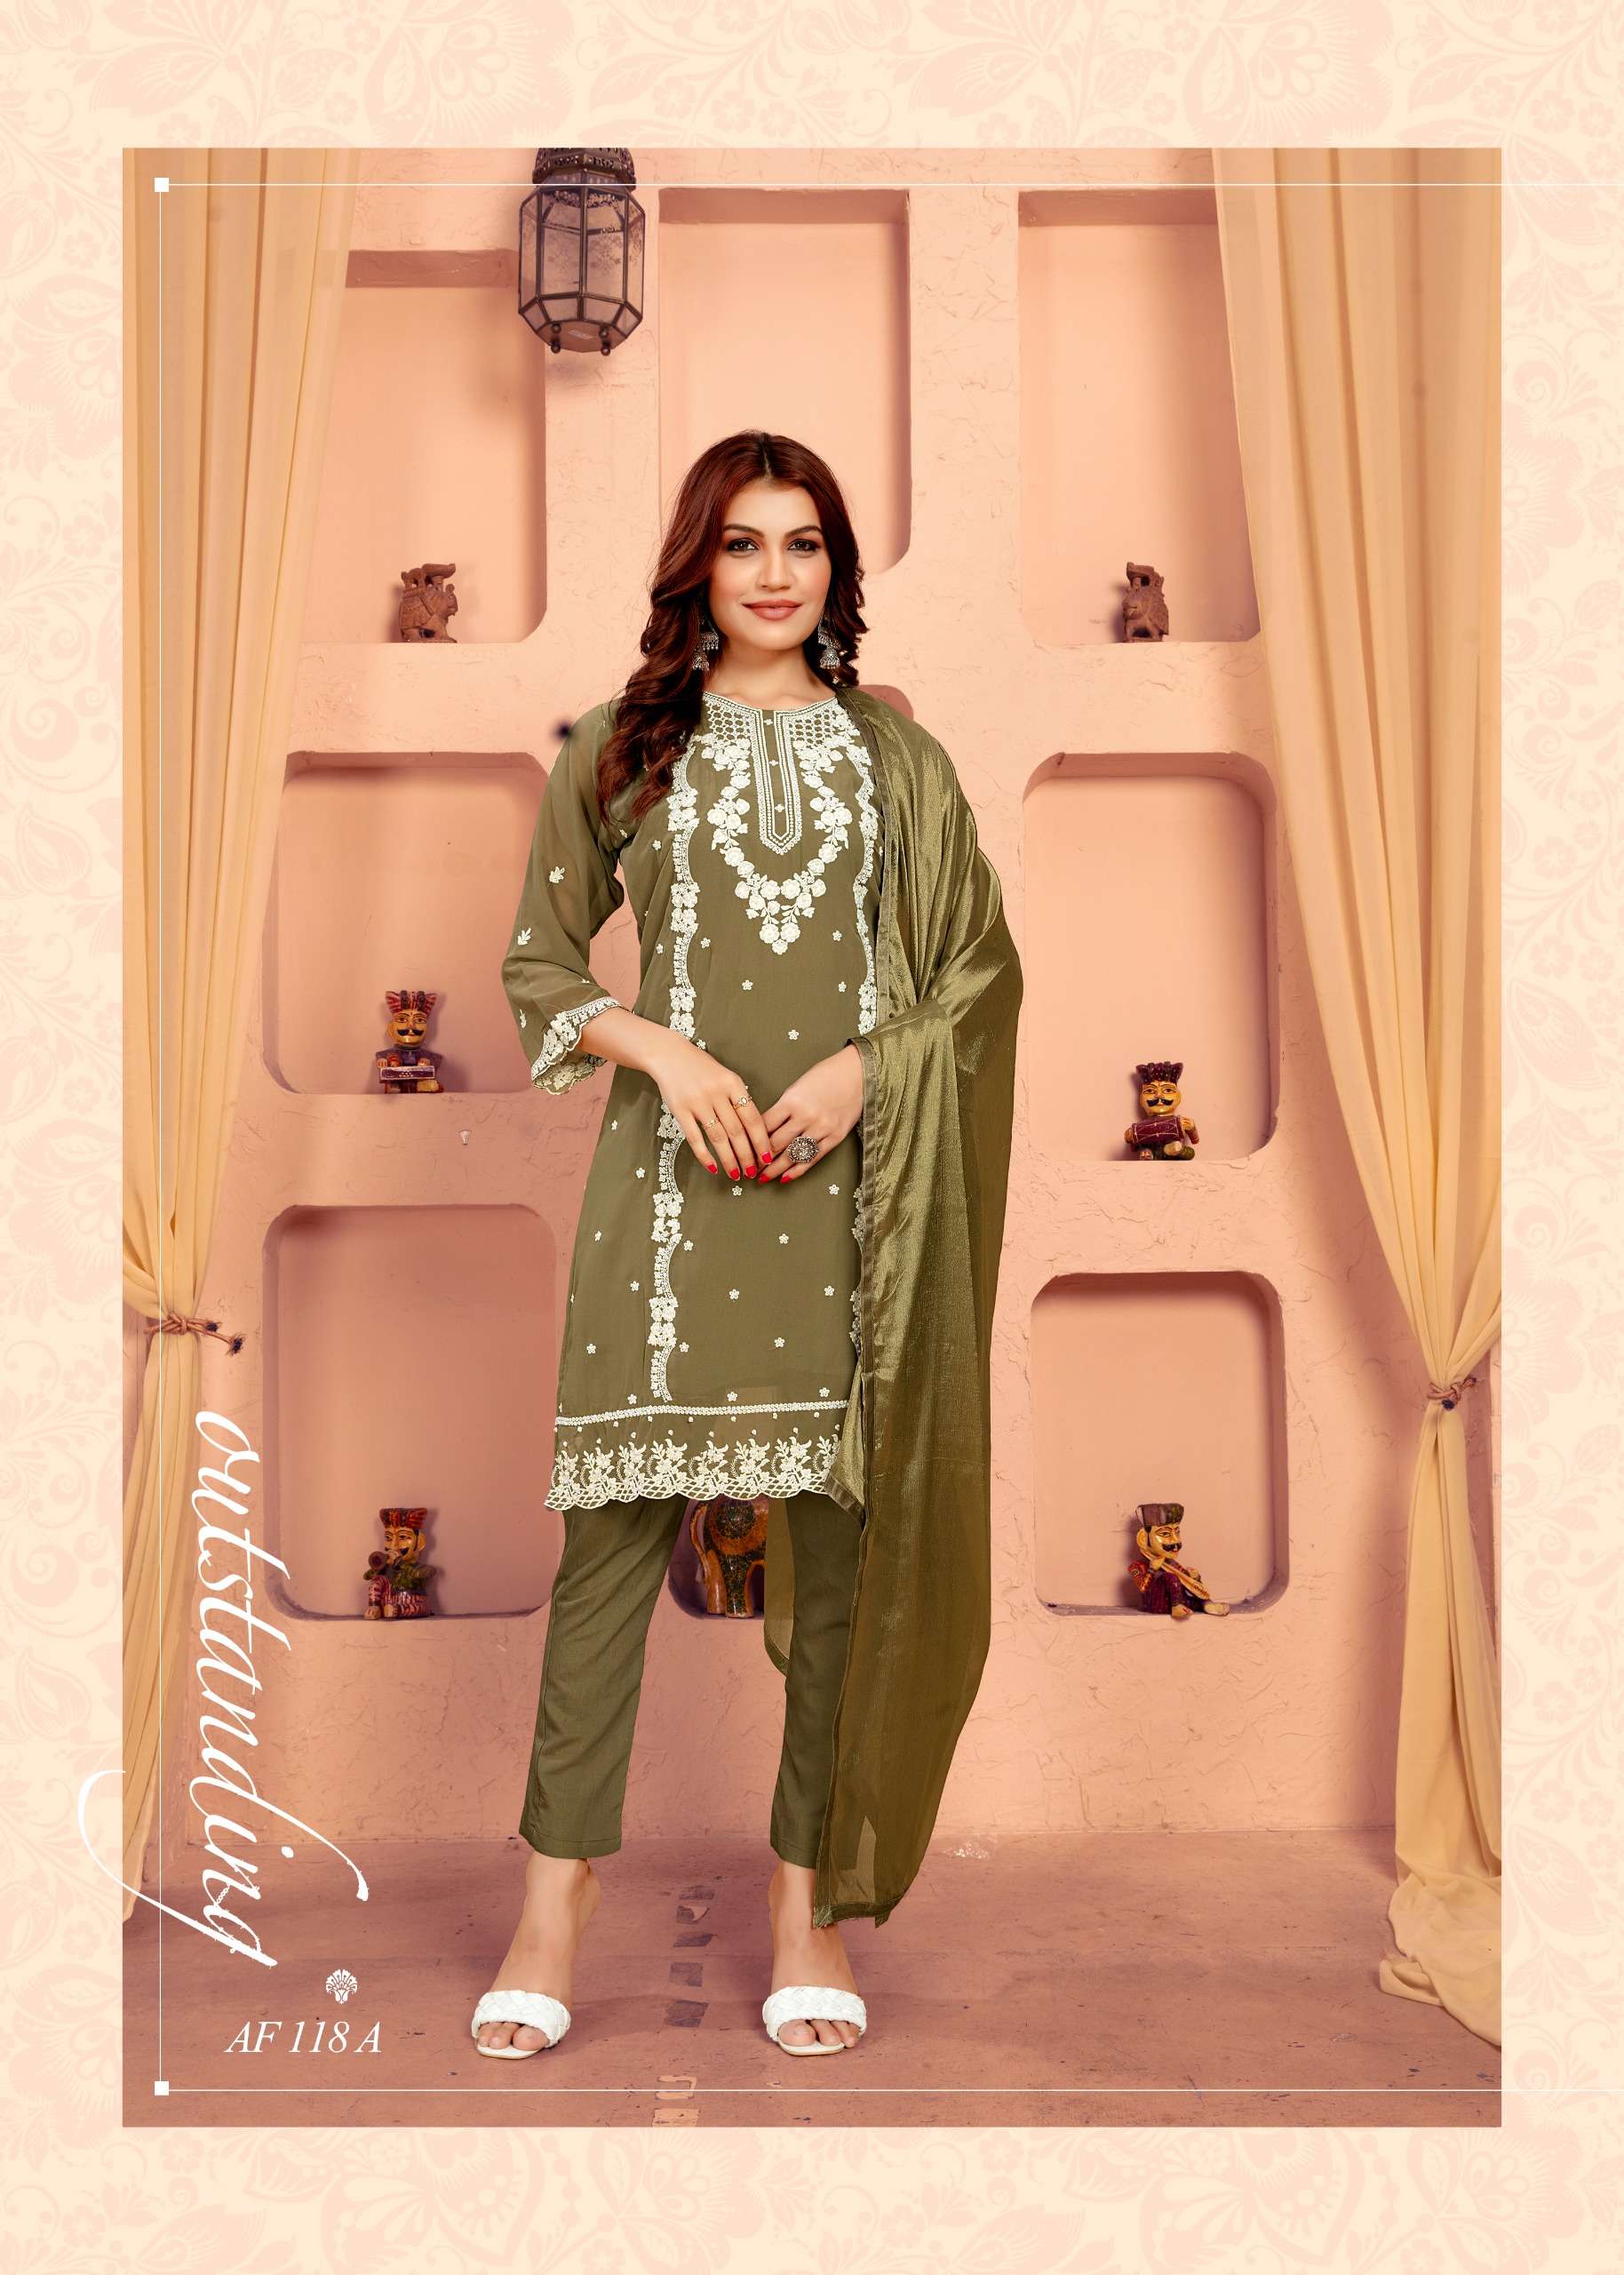 afsana 118 colour series latest designer fancy readymade salwar kameez wholesaler surat gujarat